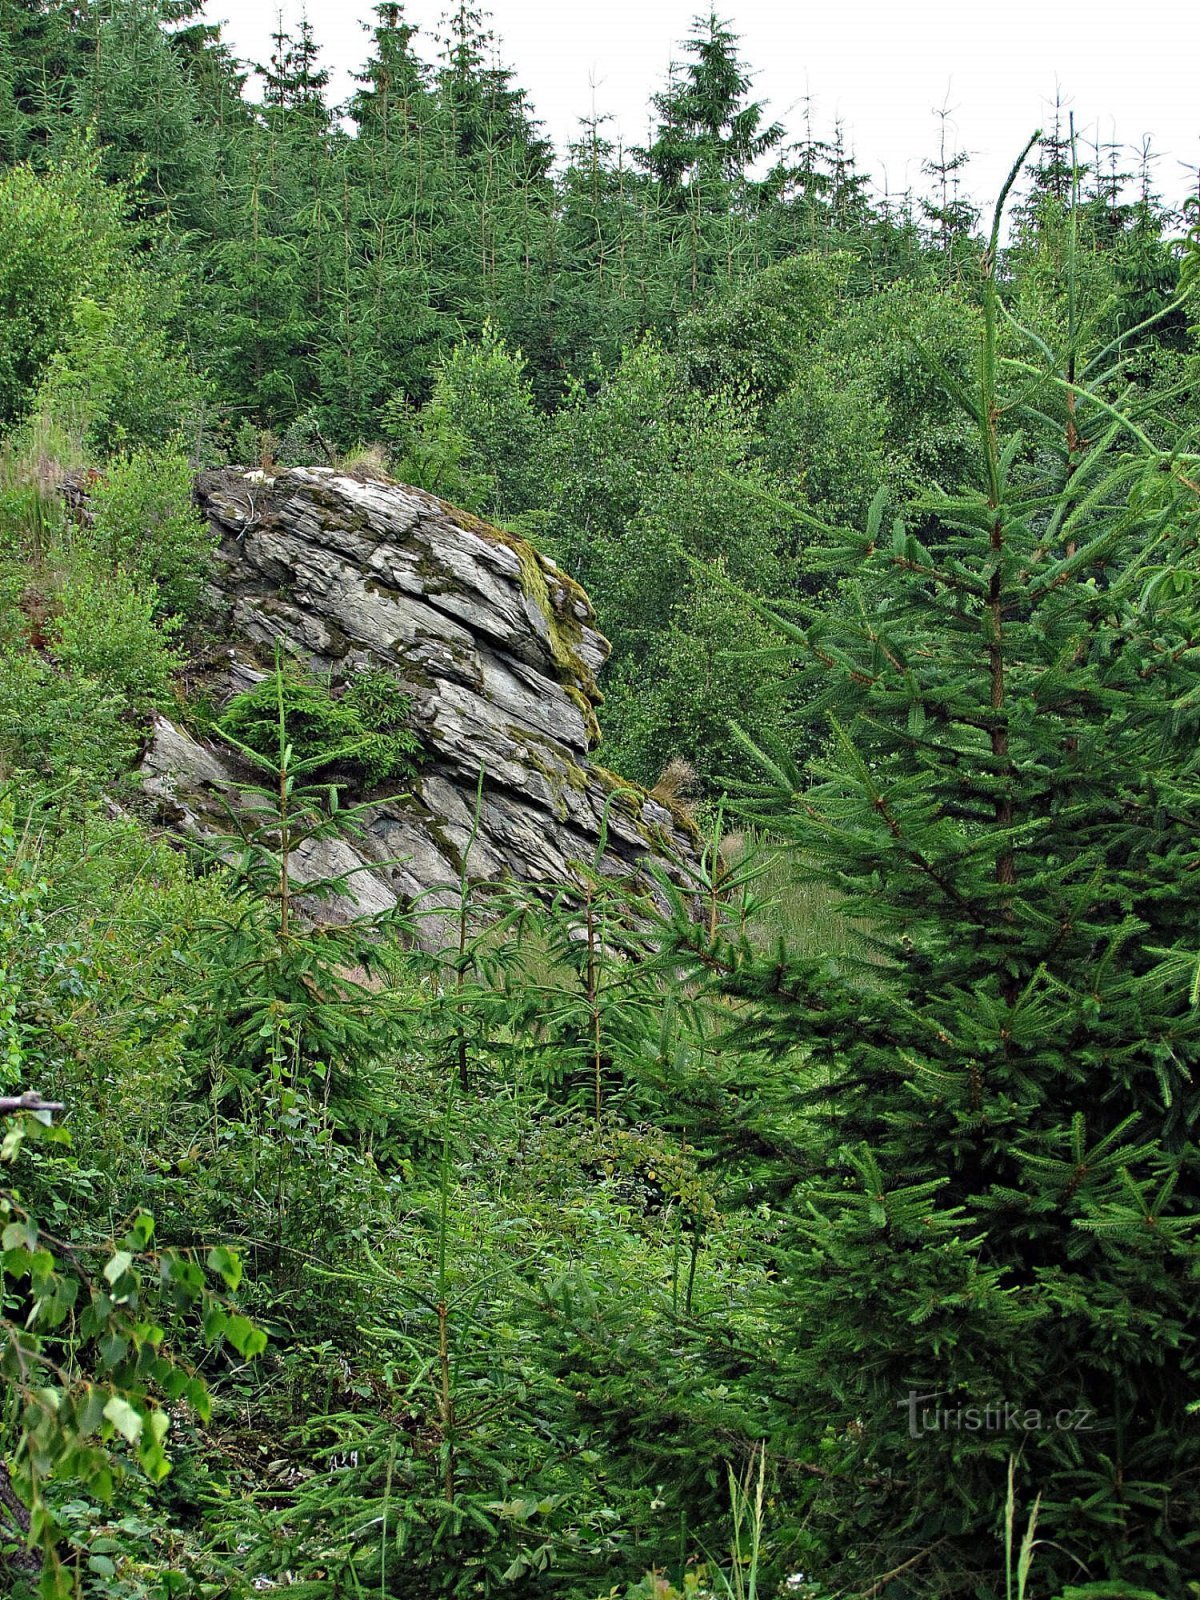 Koukalka Rocks perto de Chotěboře